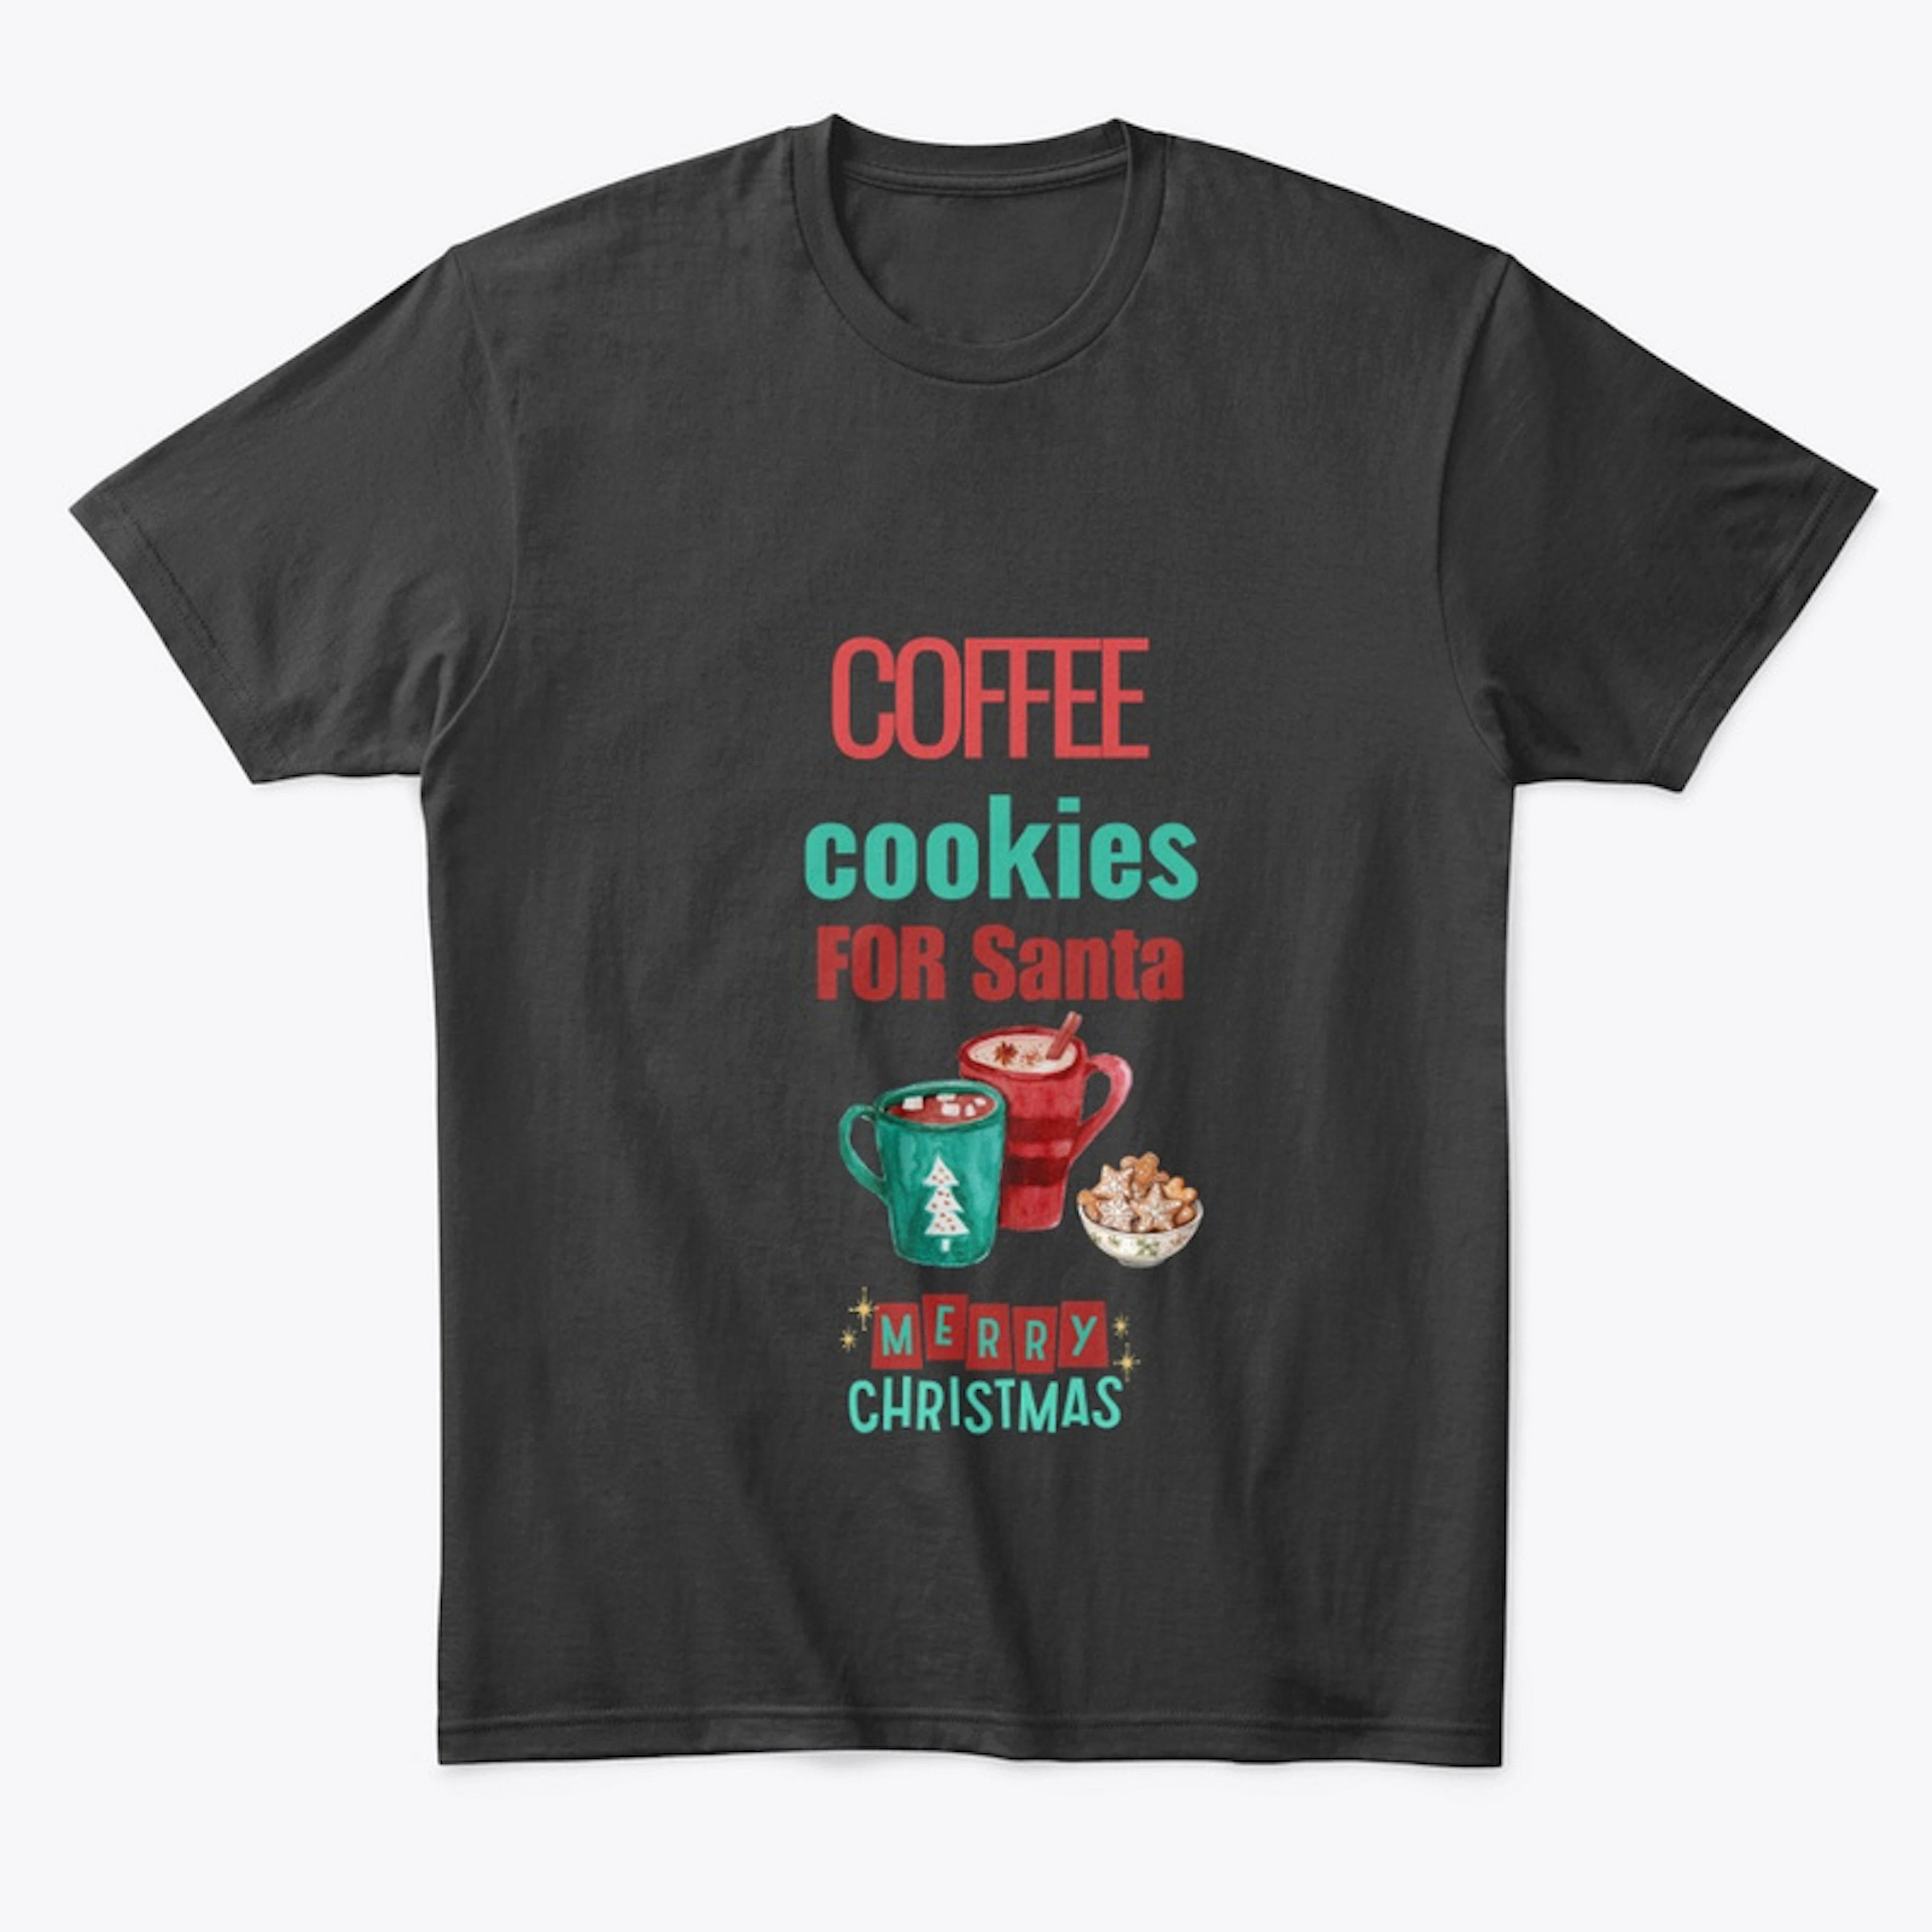 Coffee cookies for Santa